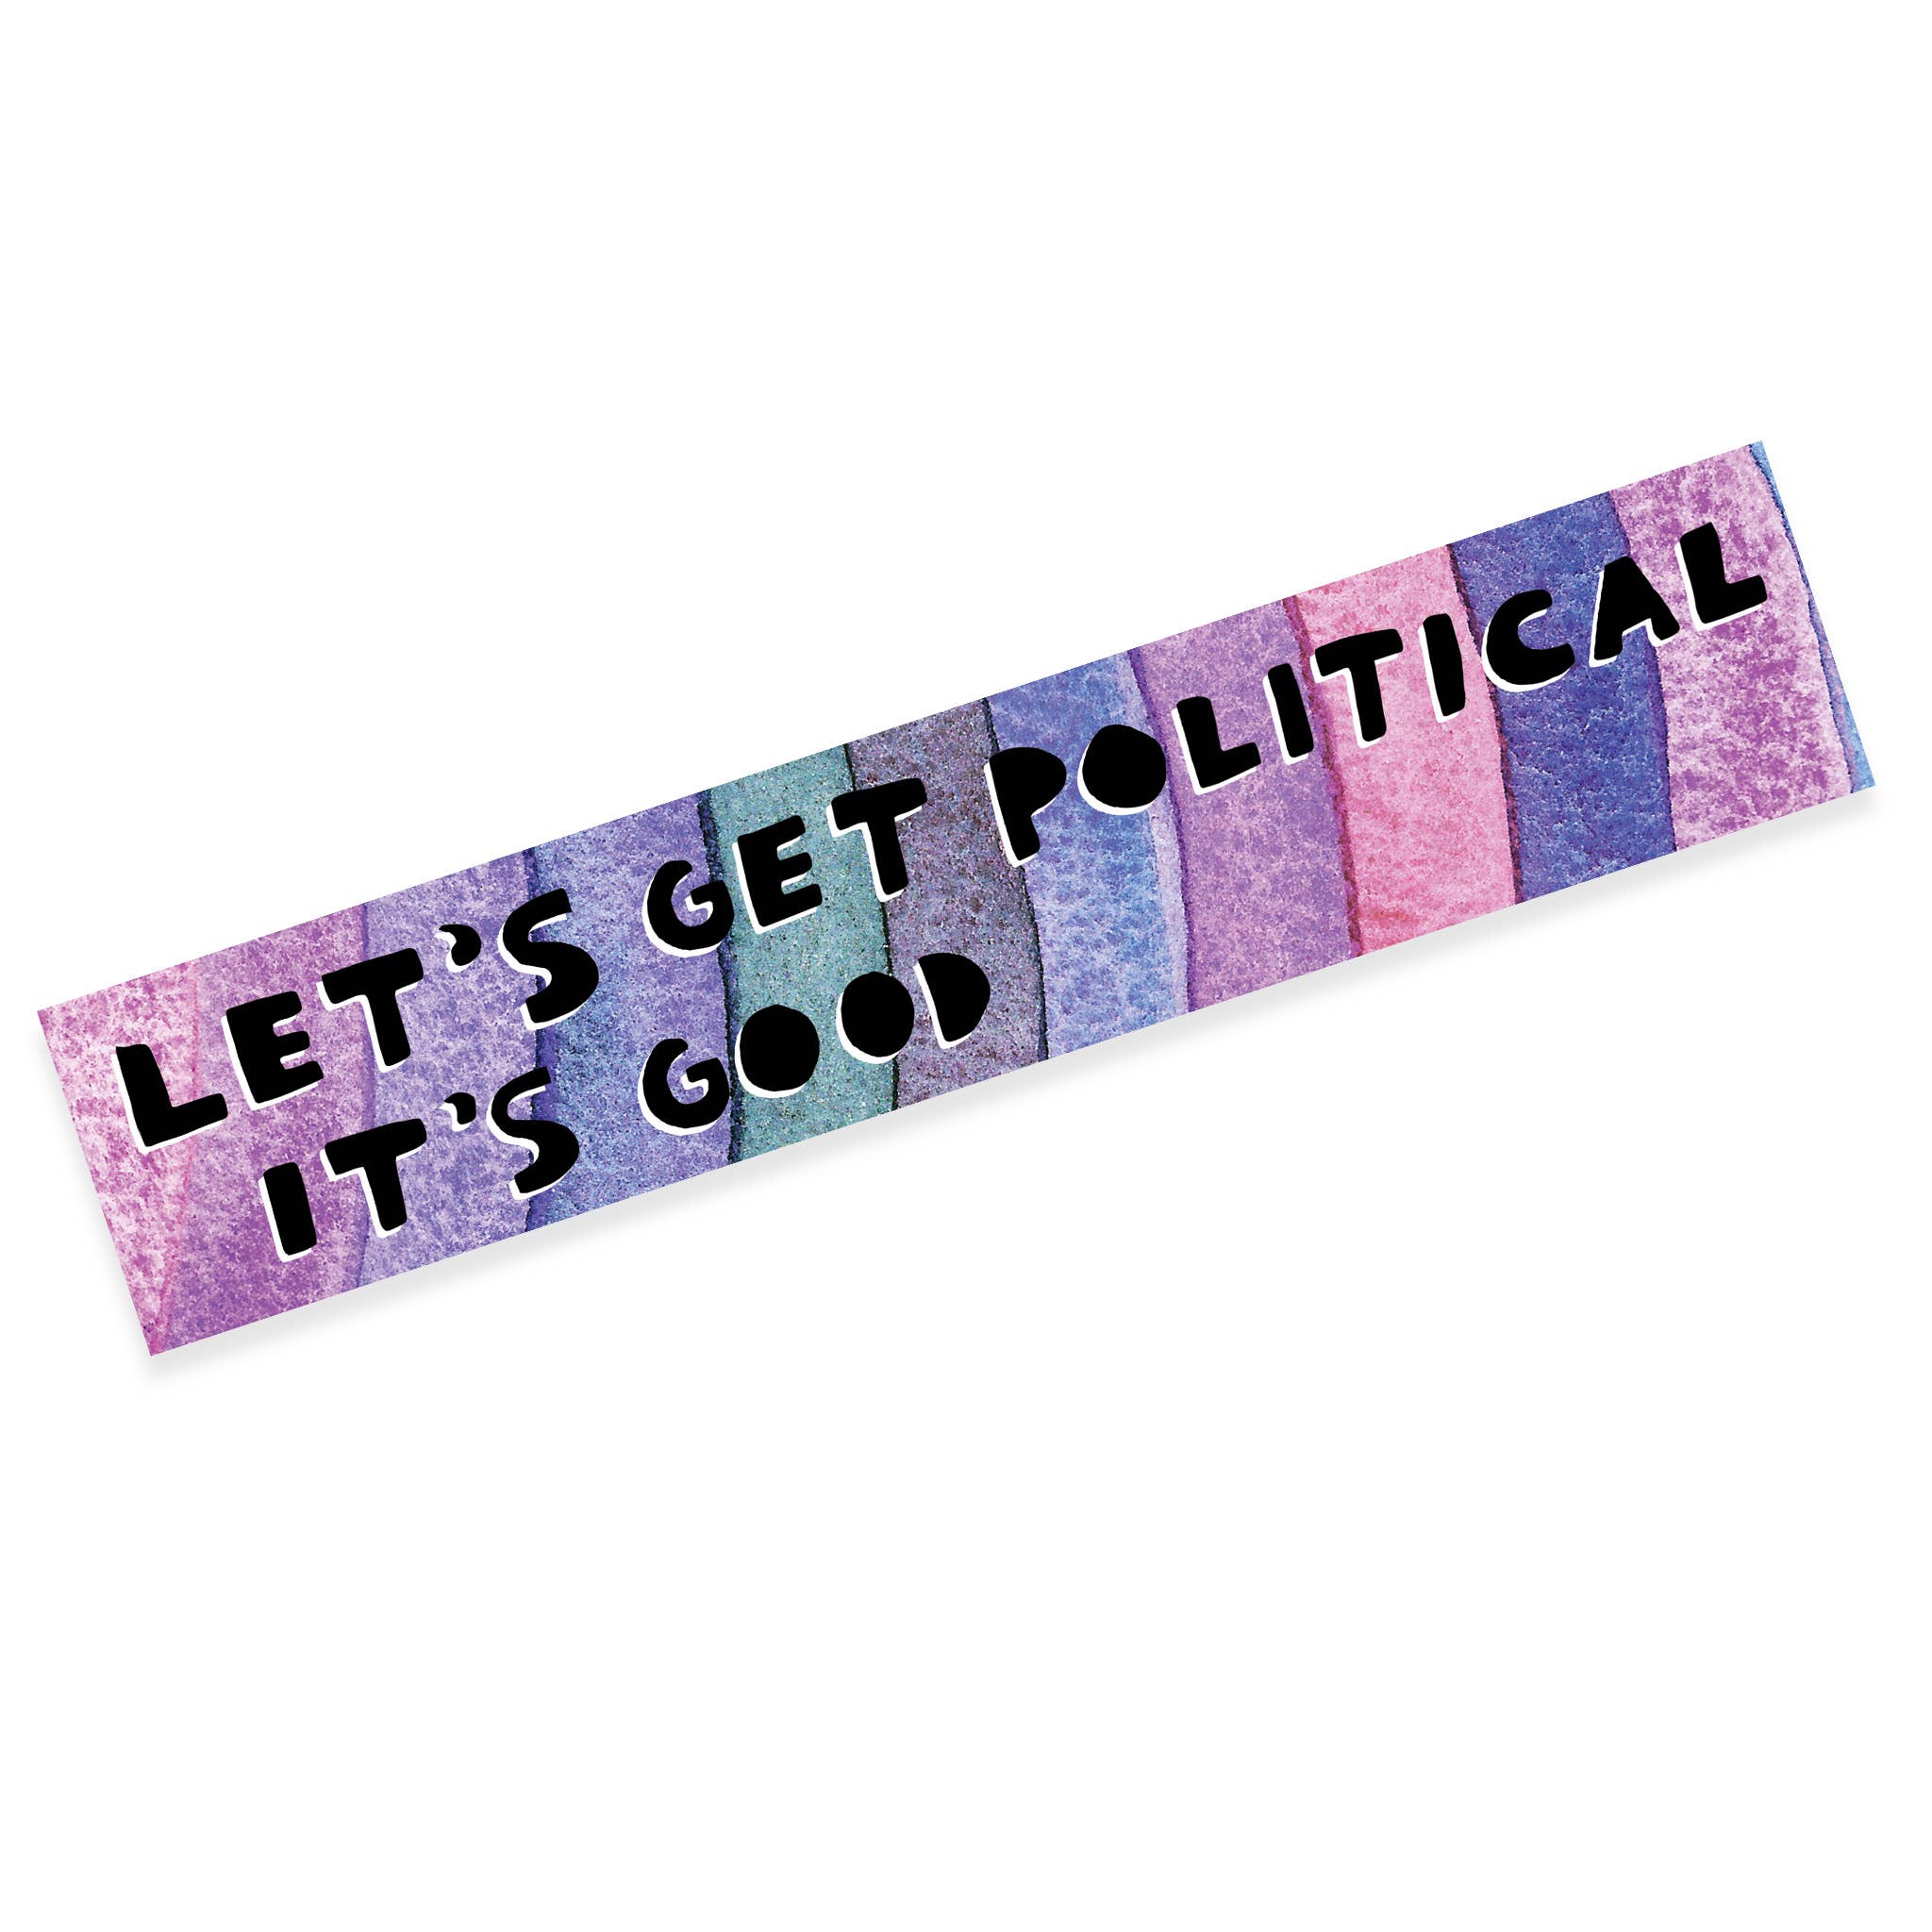 Let's Get Political - It's Good | Sticker - Spiral Circle